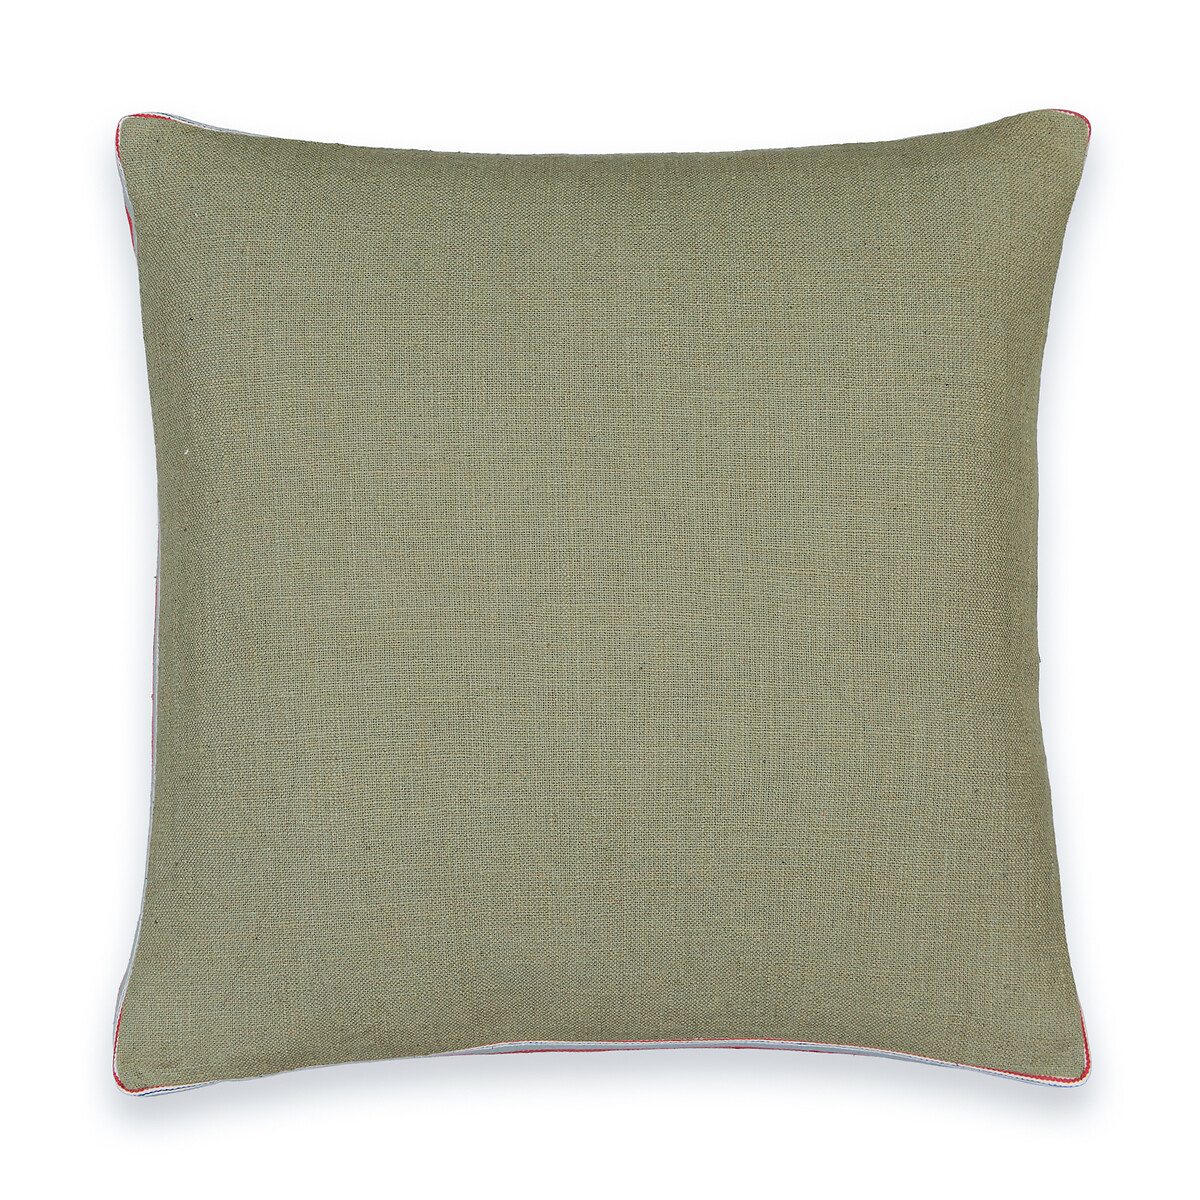 Чехол на подушку 40 х 40 см двухцветный Finistre 40 x 40 см зеленый чехол laredoute чехол на подушку с рисунком iyere 40 x 40 см зеленый